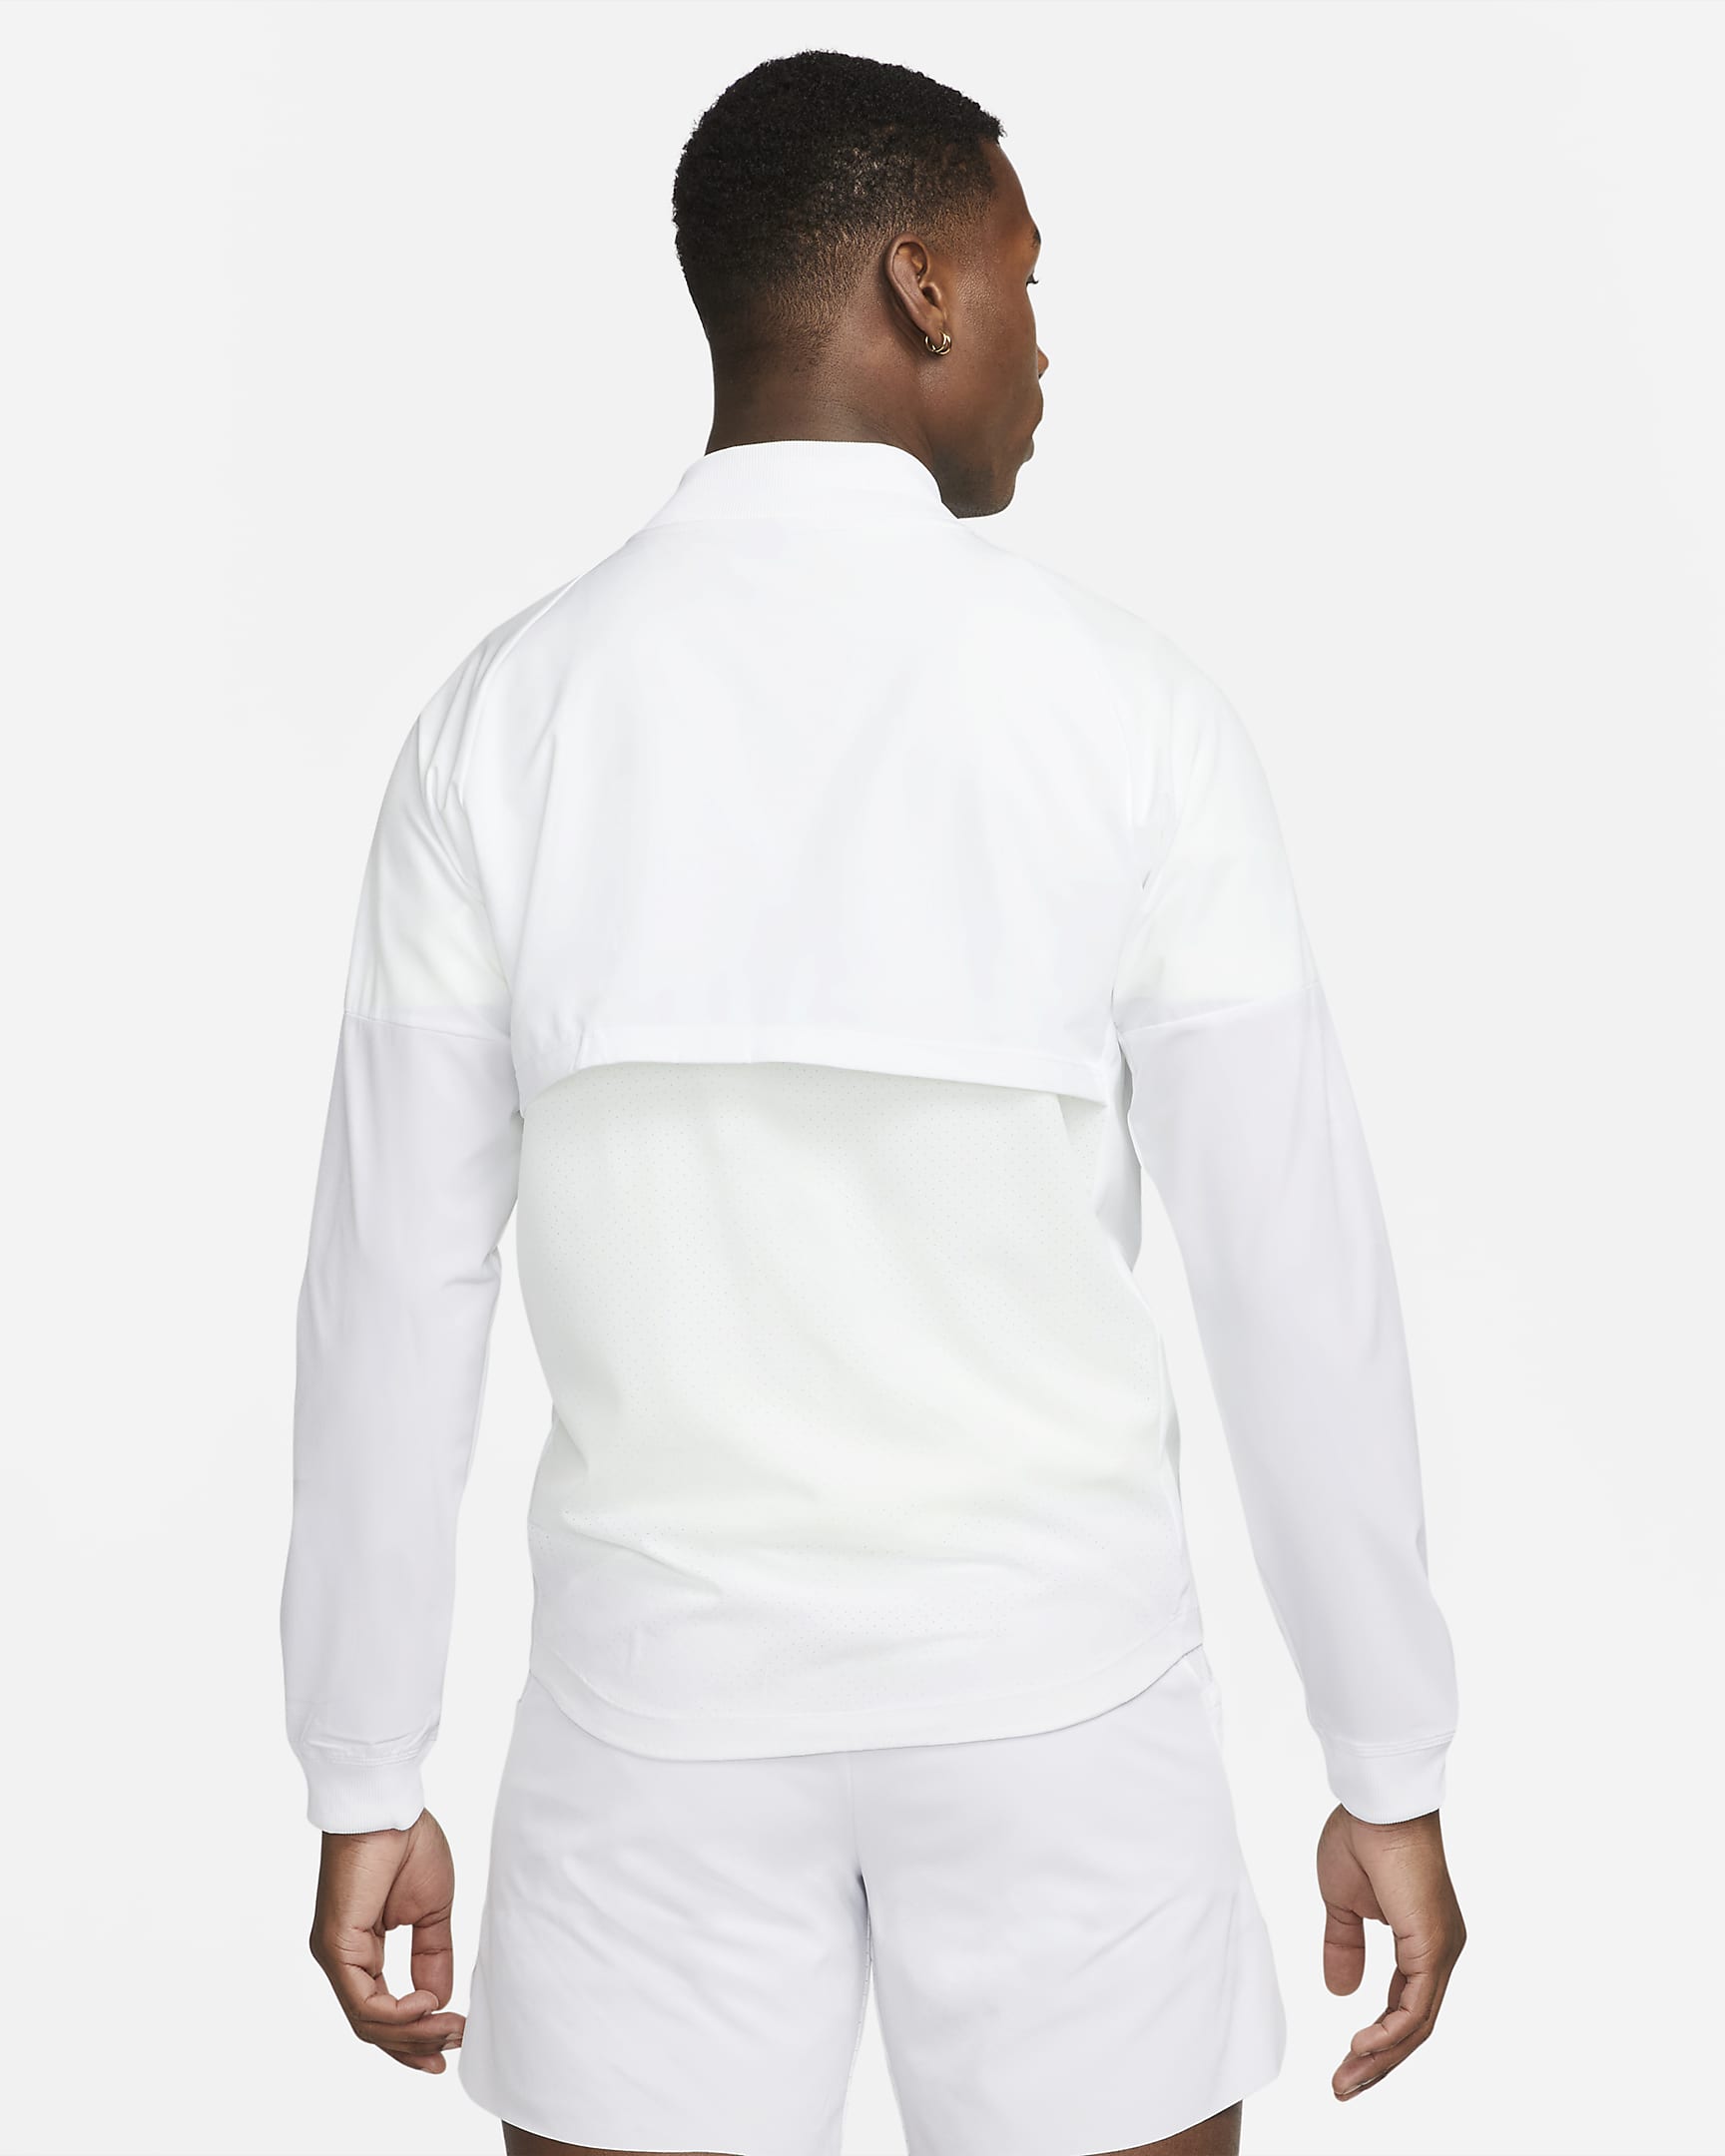 Nike Dri-FIT Rafa Men's Tennis Jacket - White/Black